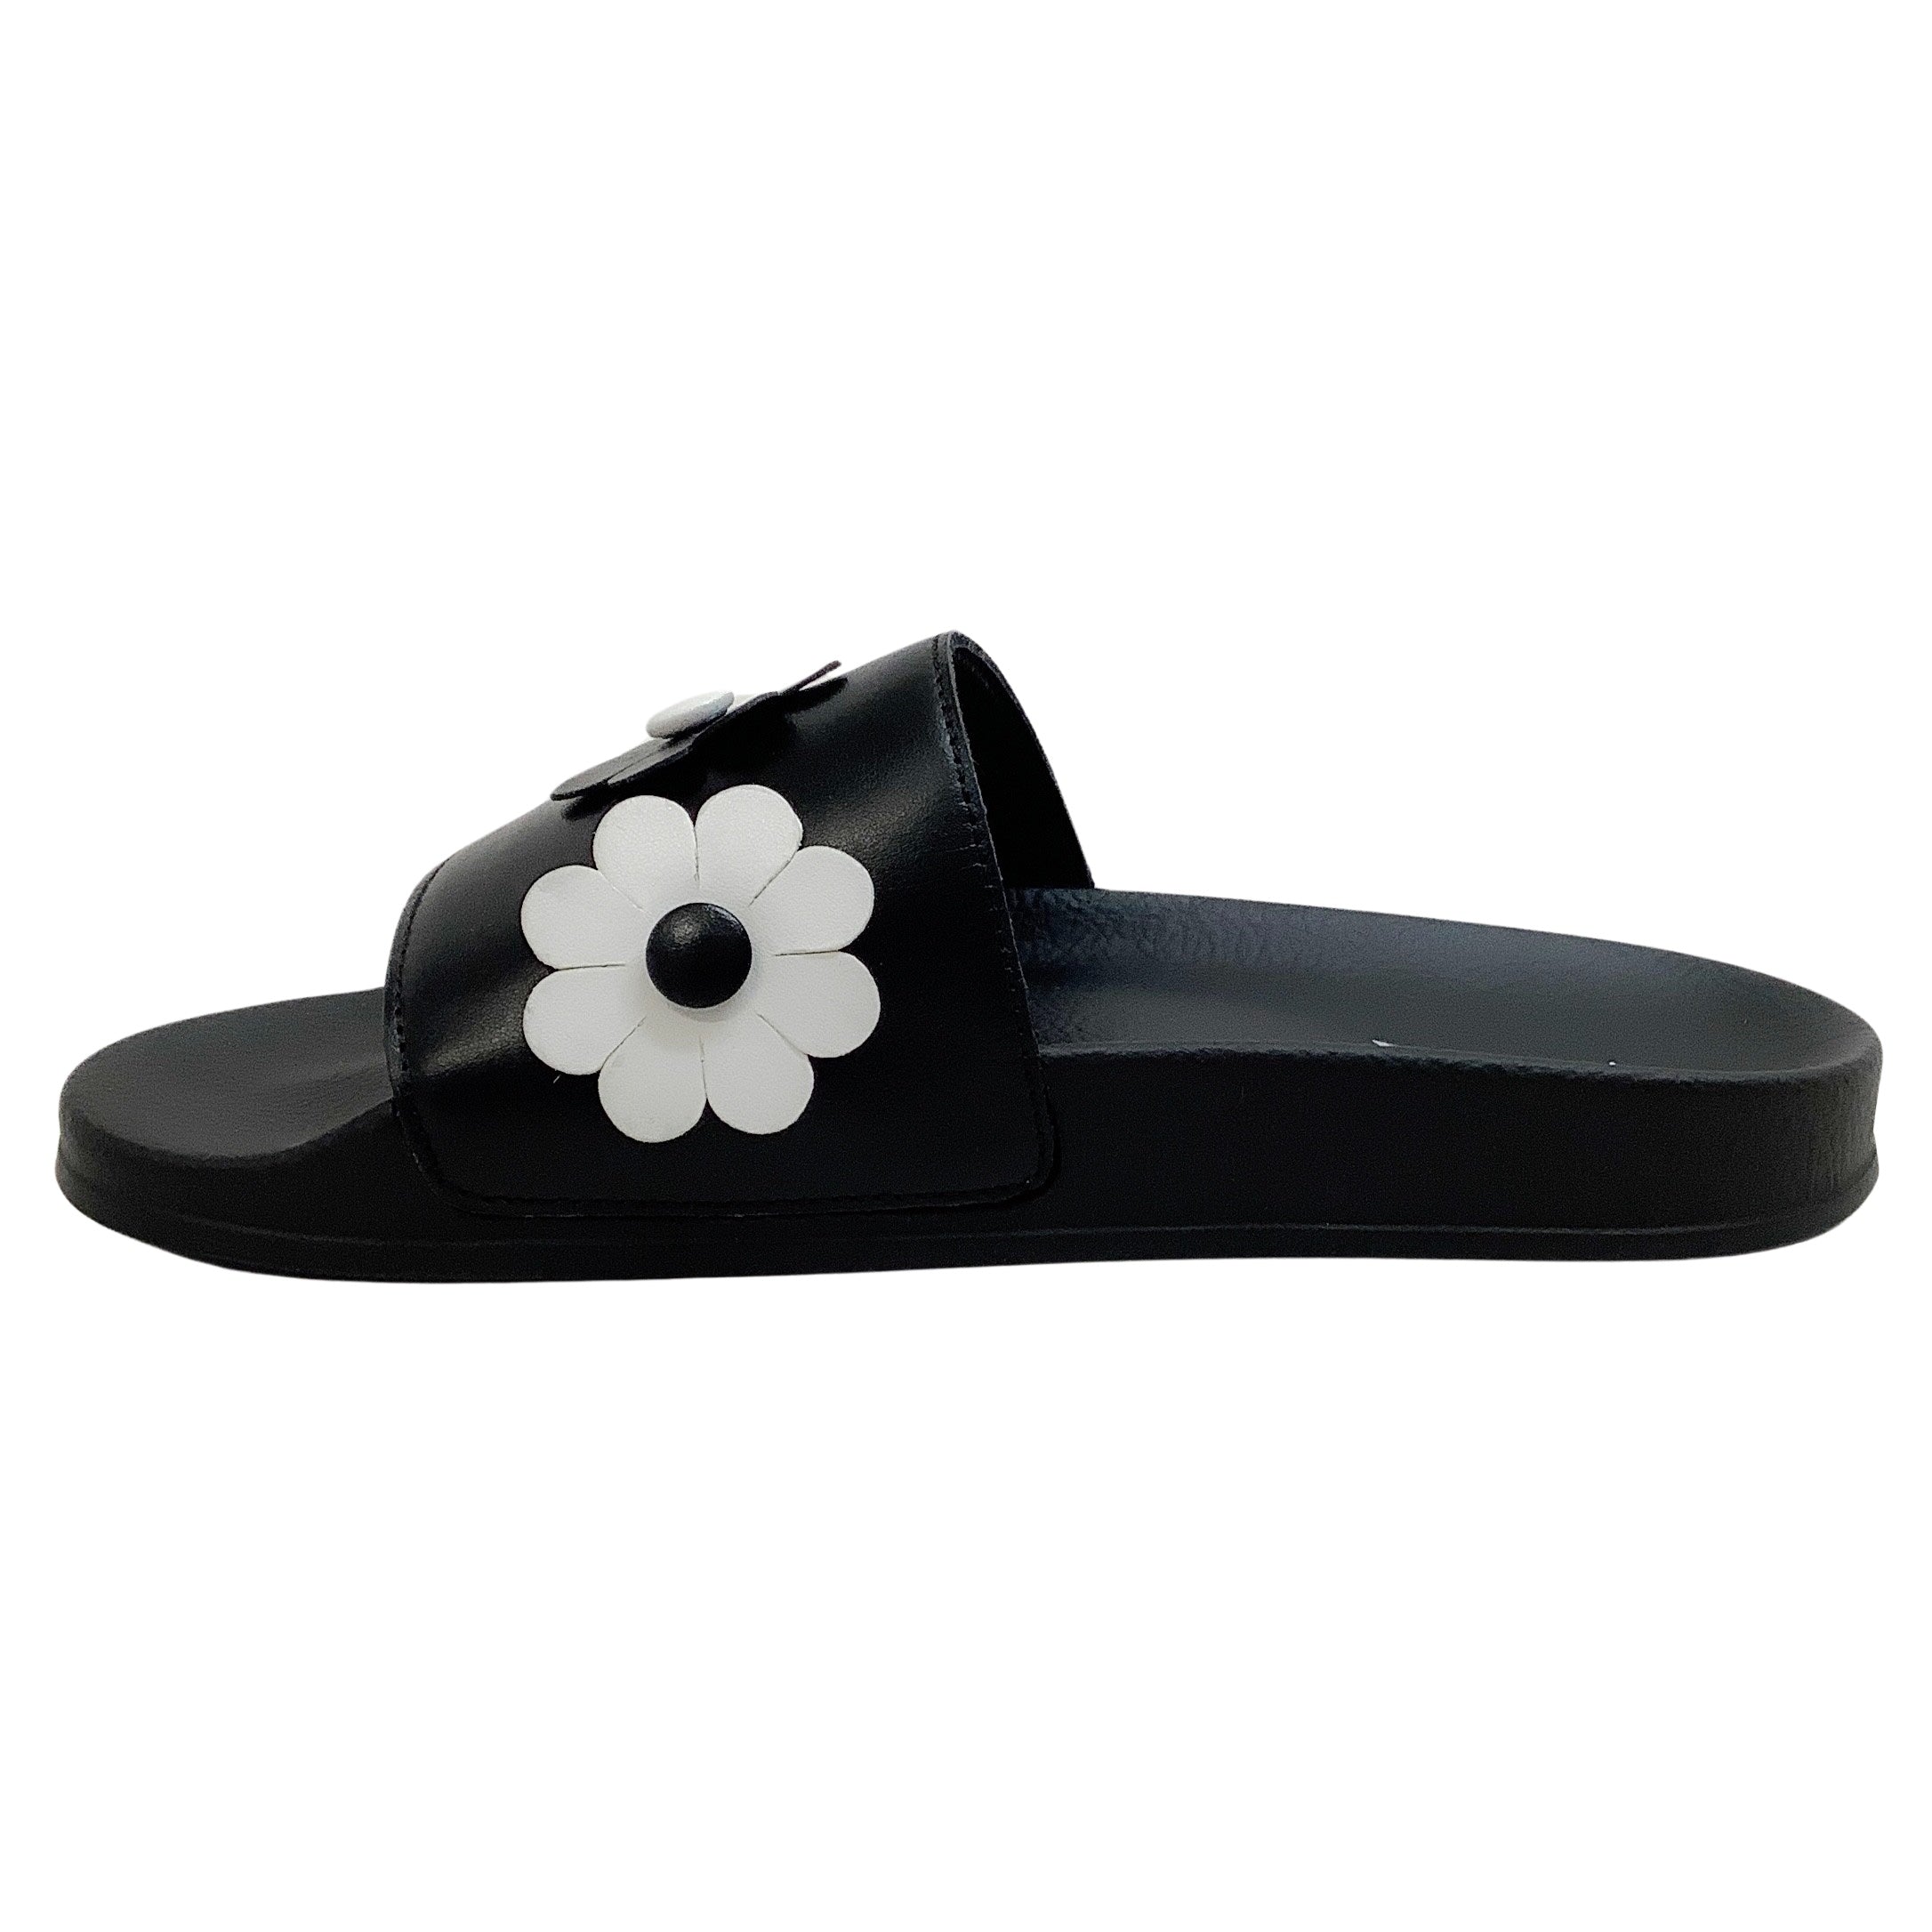 Vivetta Black Leather Slide Sandals with White Flowers